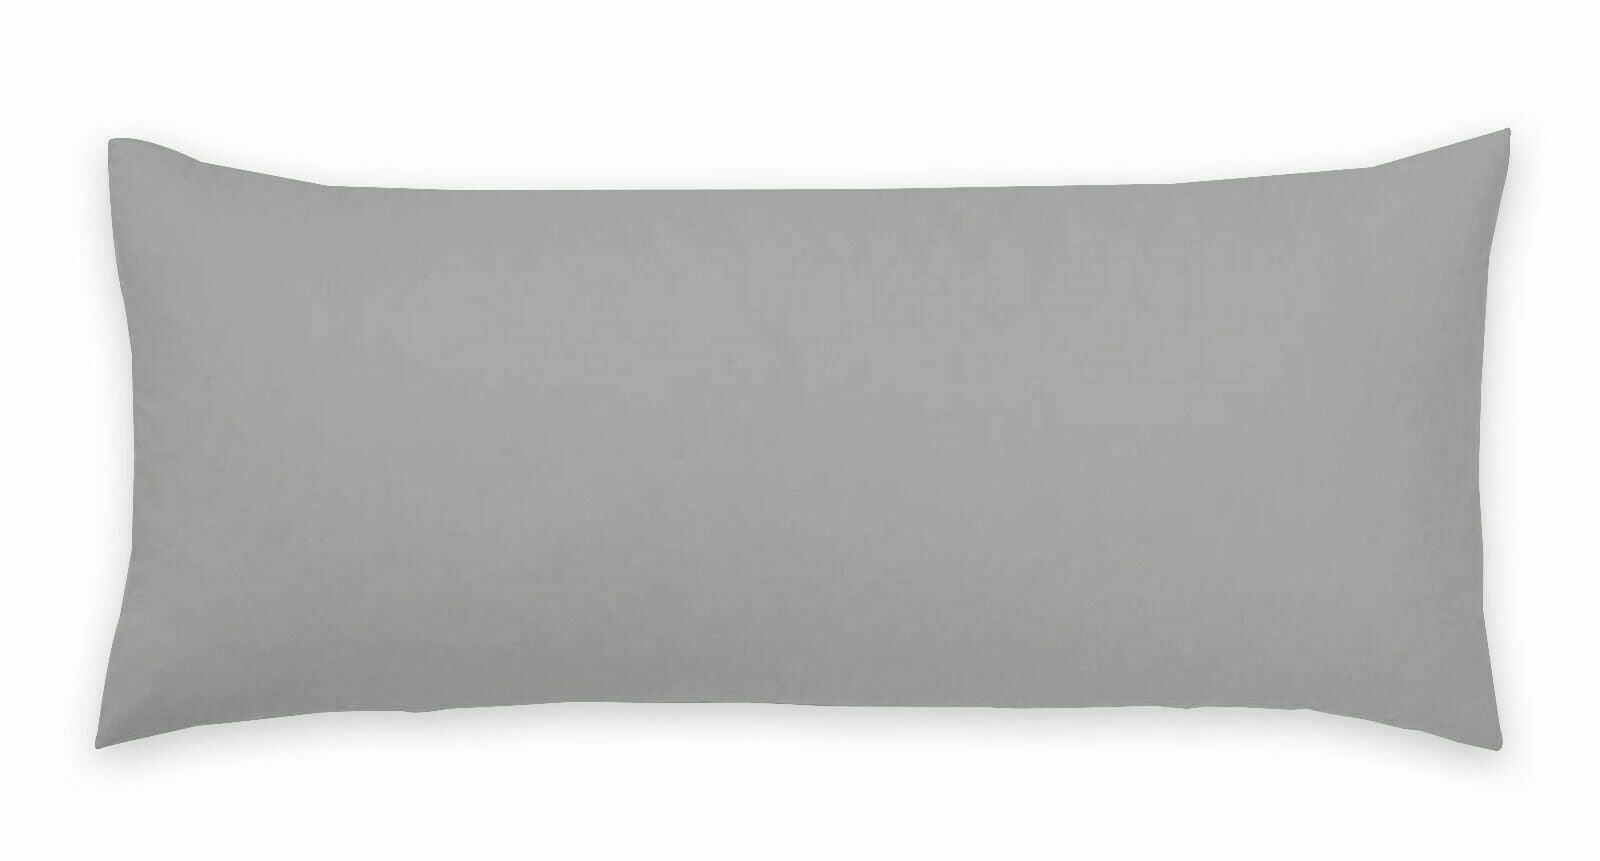 Orthopedic Bolster Pillowcase Nursing/Pregnancy Long Pillowcases in Three Colors - Arlinens